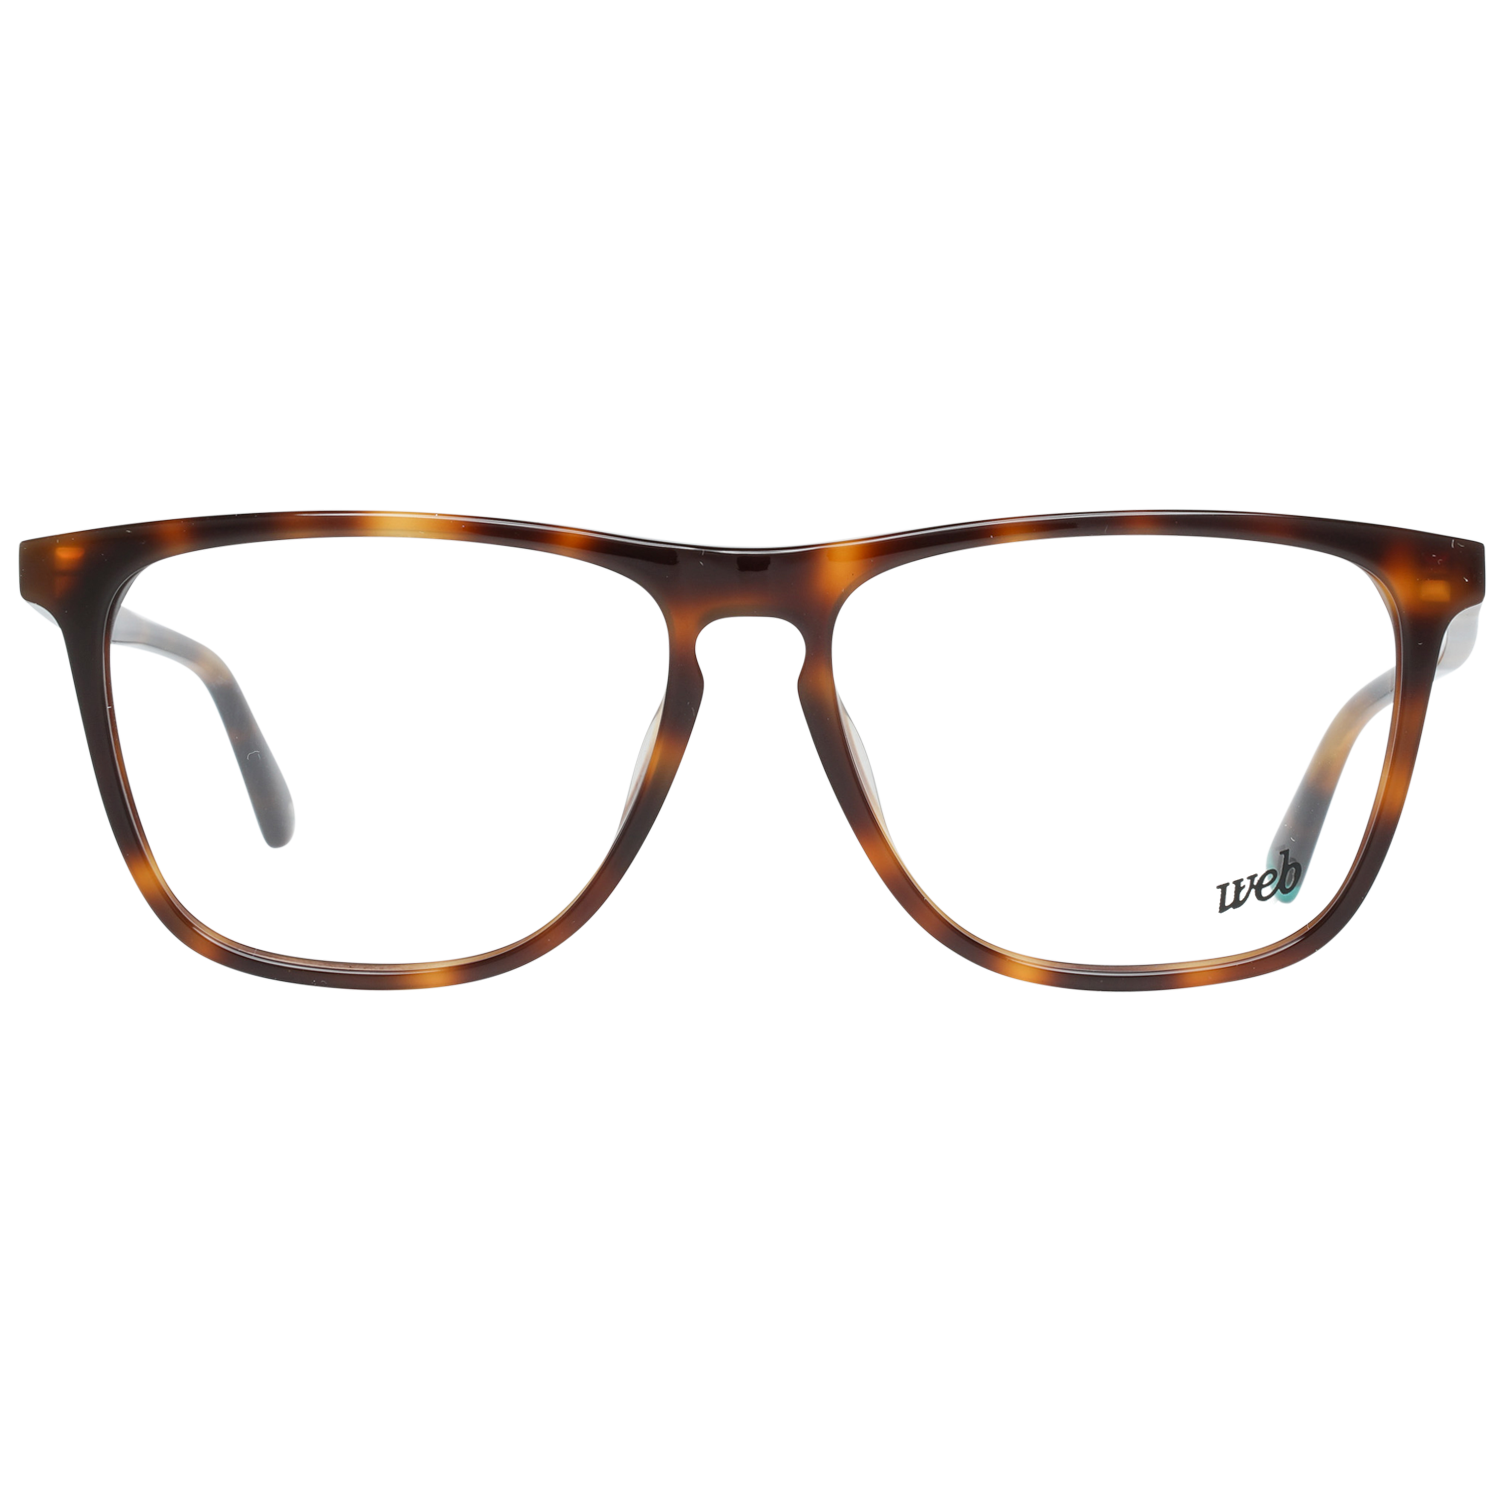 Web Frames Web Glasses Optical Frame WE5286 52A 55 Eyeglasses Eyewear UK USA Australia 